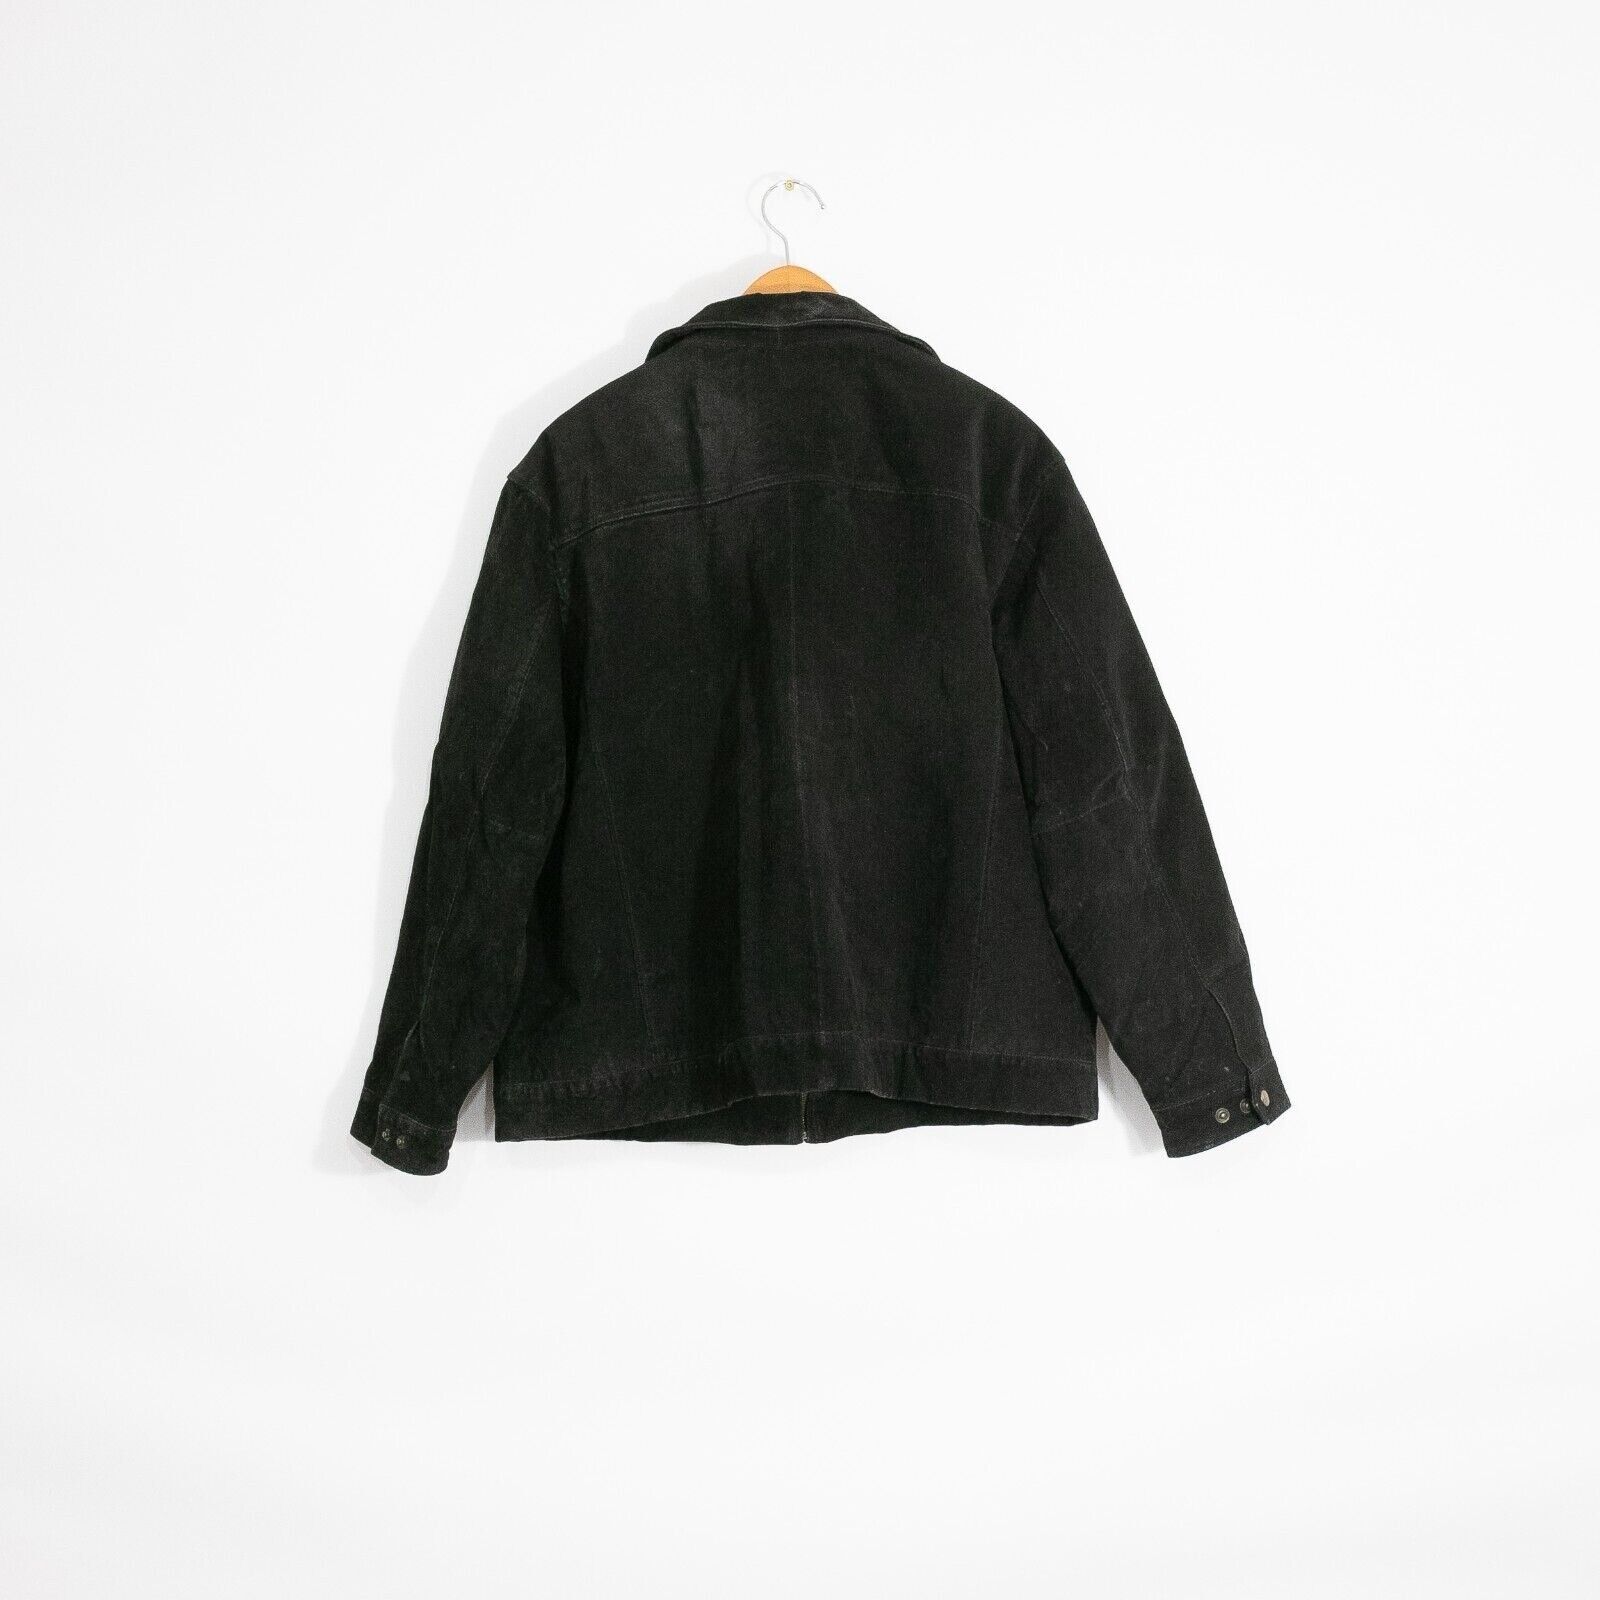 Vintage Vintage Black Suede Zip Up Jacket XL - Patina Distressed Size US XL / EU 56 / 4 - 6 Thumbnail